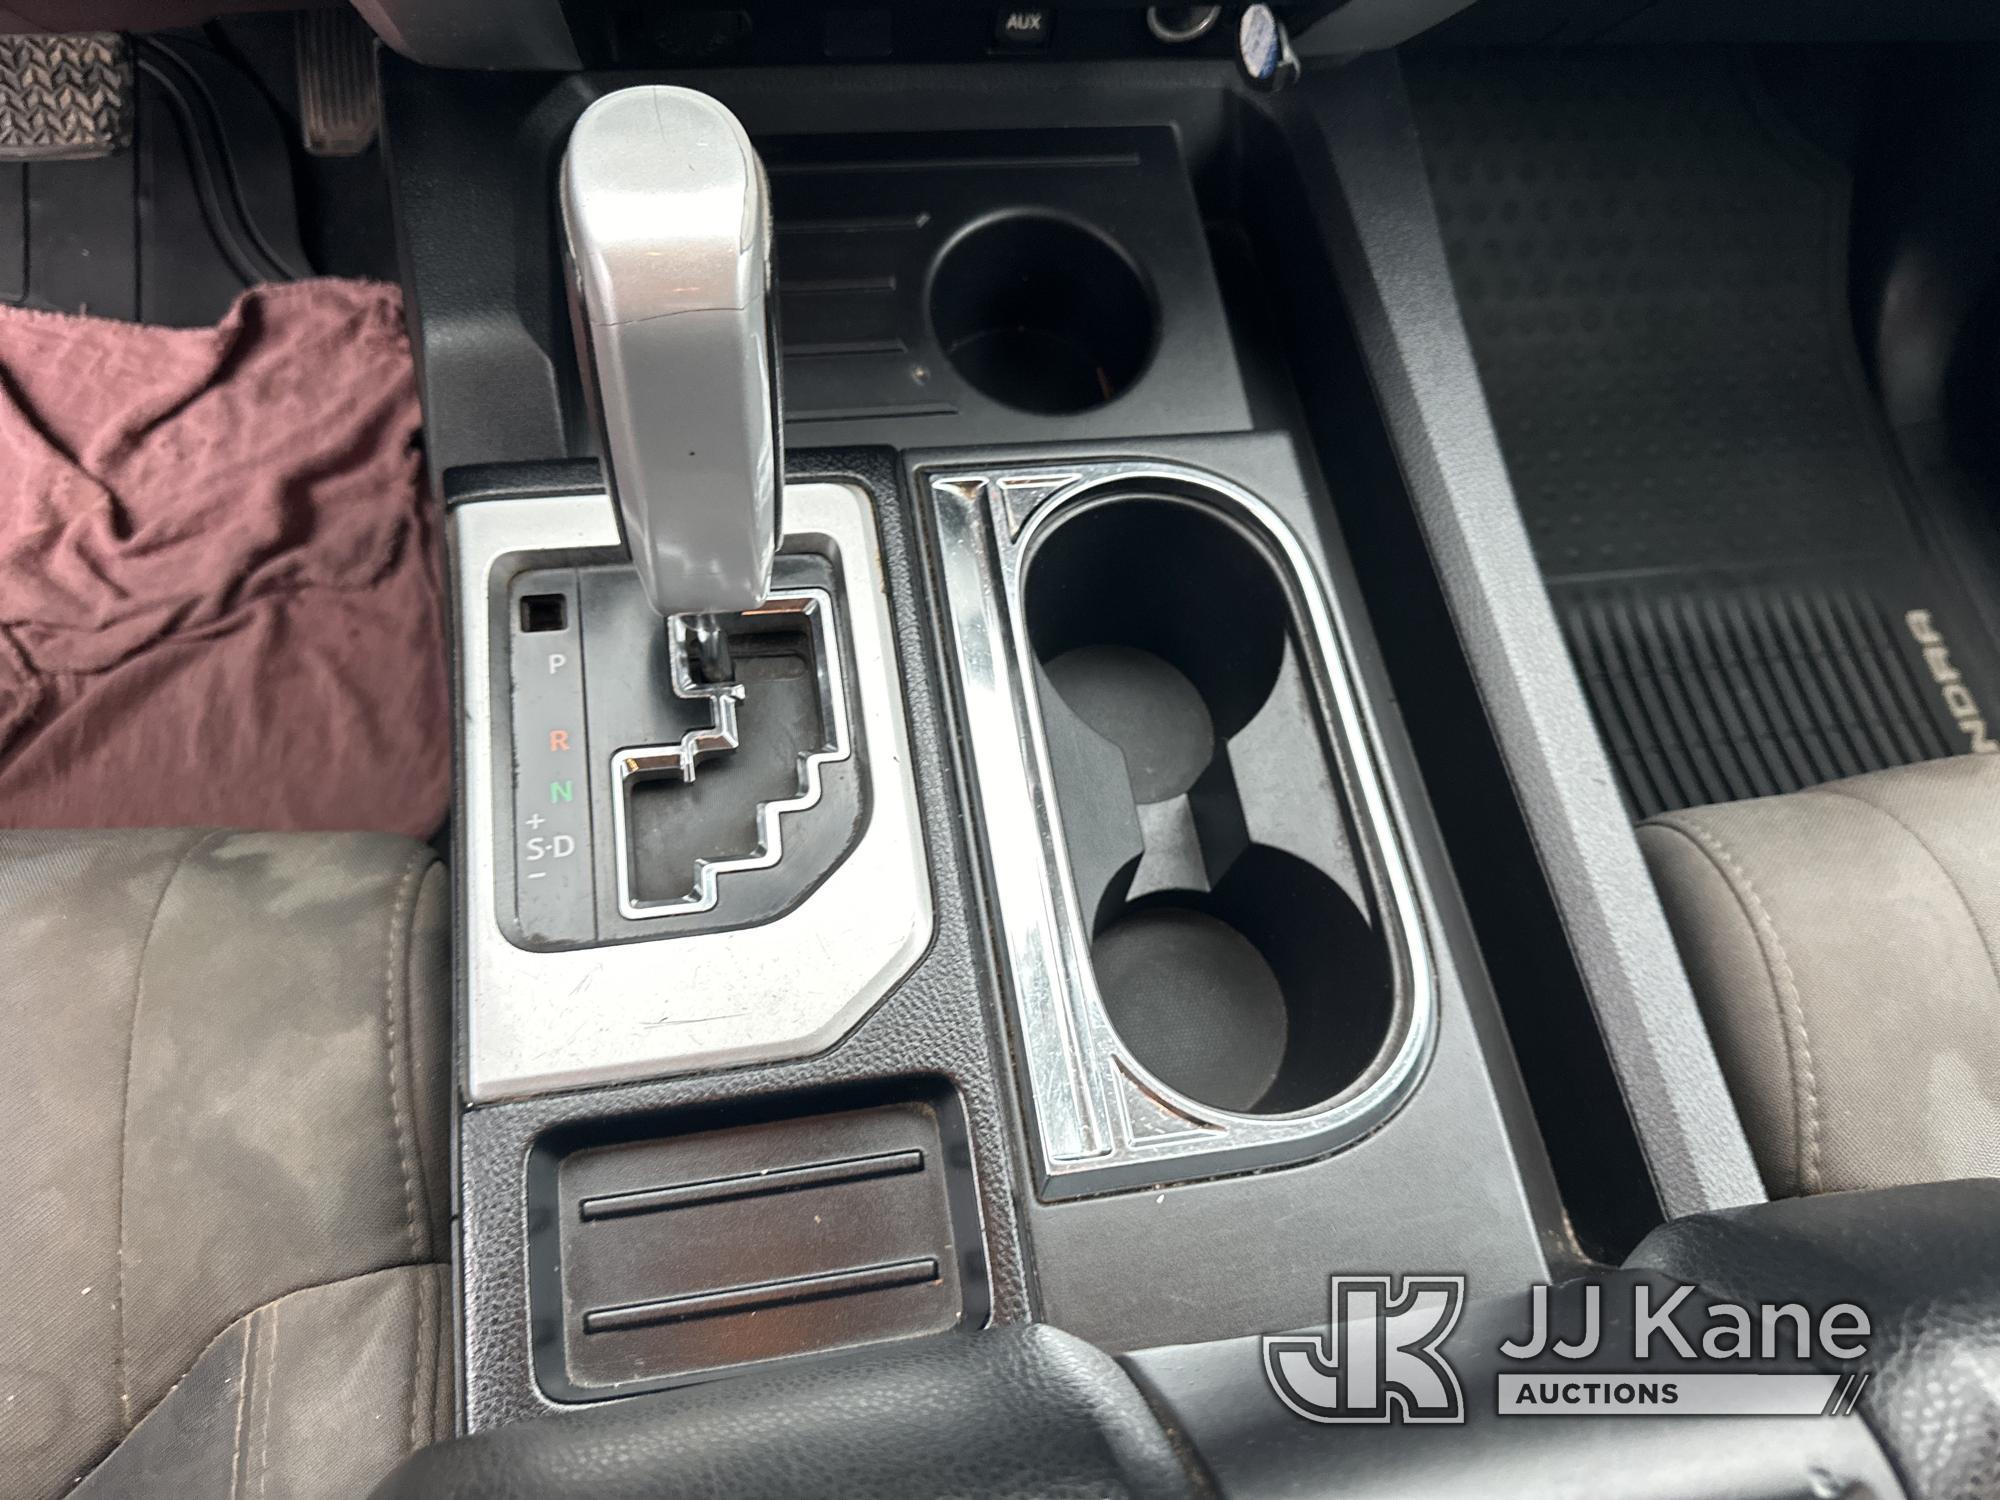 (Shelby, NC) 2015 Toyota Tundra 4x4 Crew-Cab Pickup Truck Runs & Moves) (Check Engine Light On